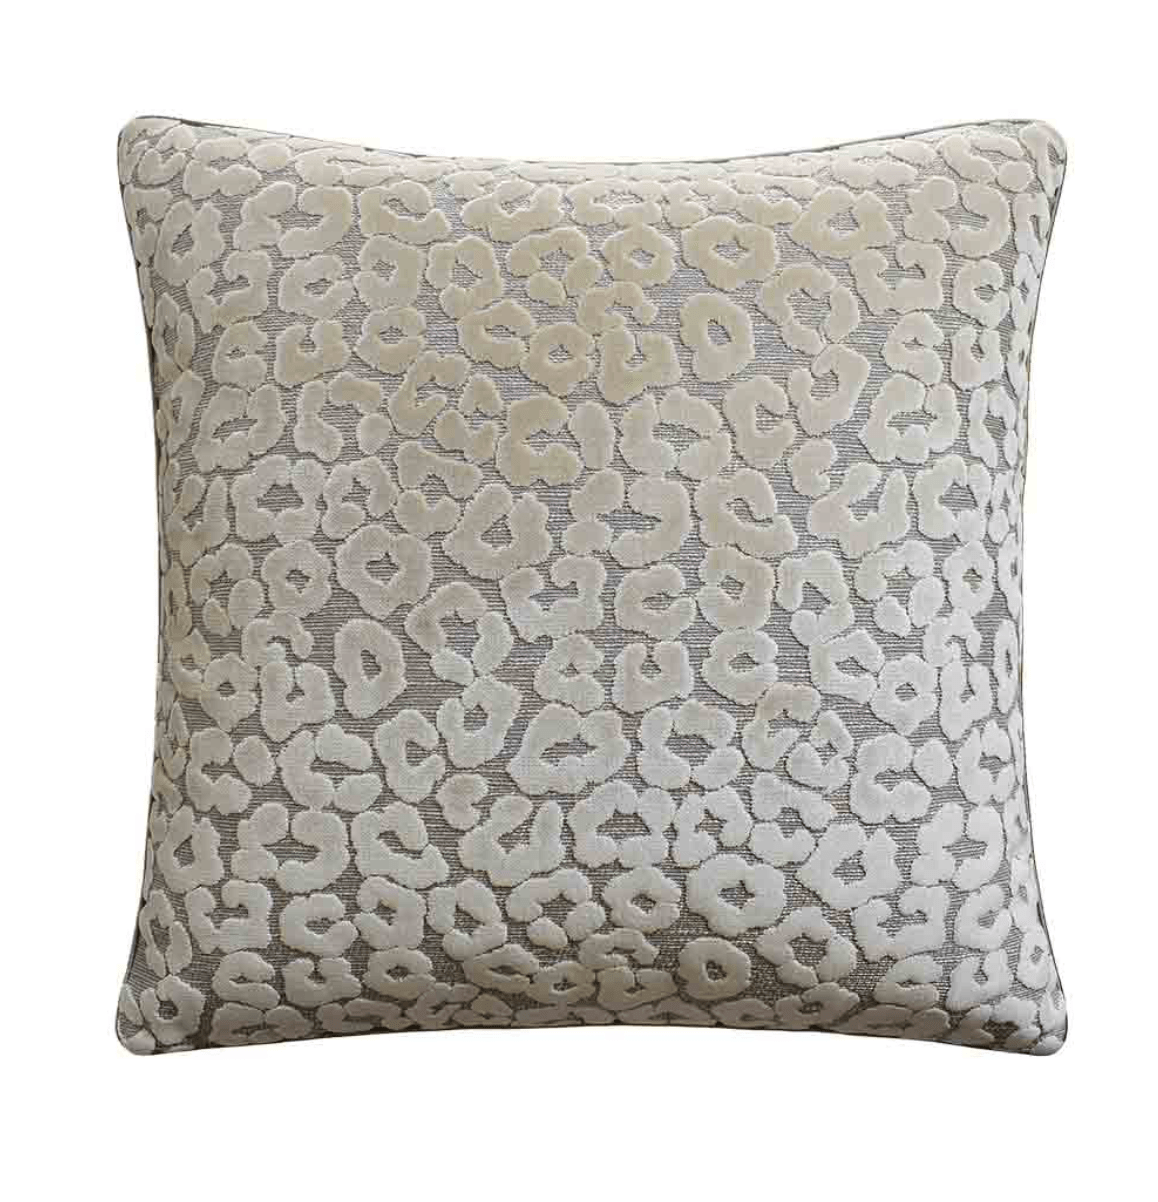 Ryan Studio Wild Cat Pillow in Linen Pillows